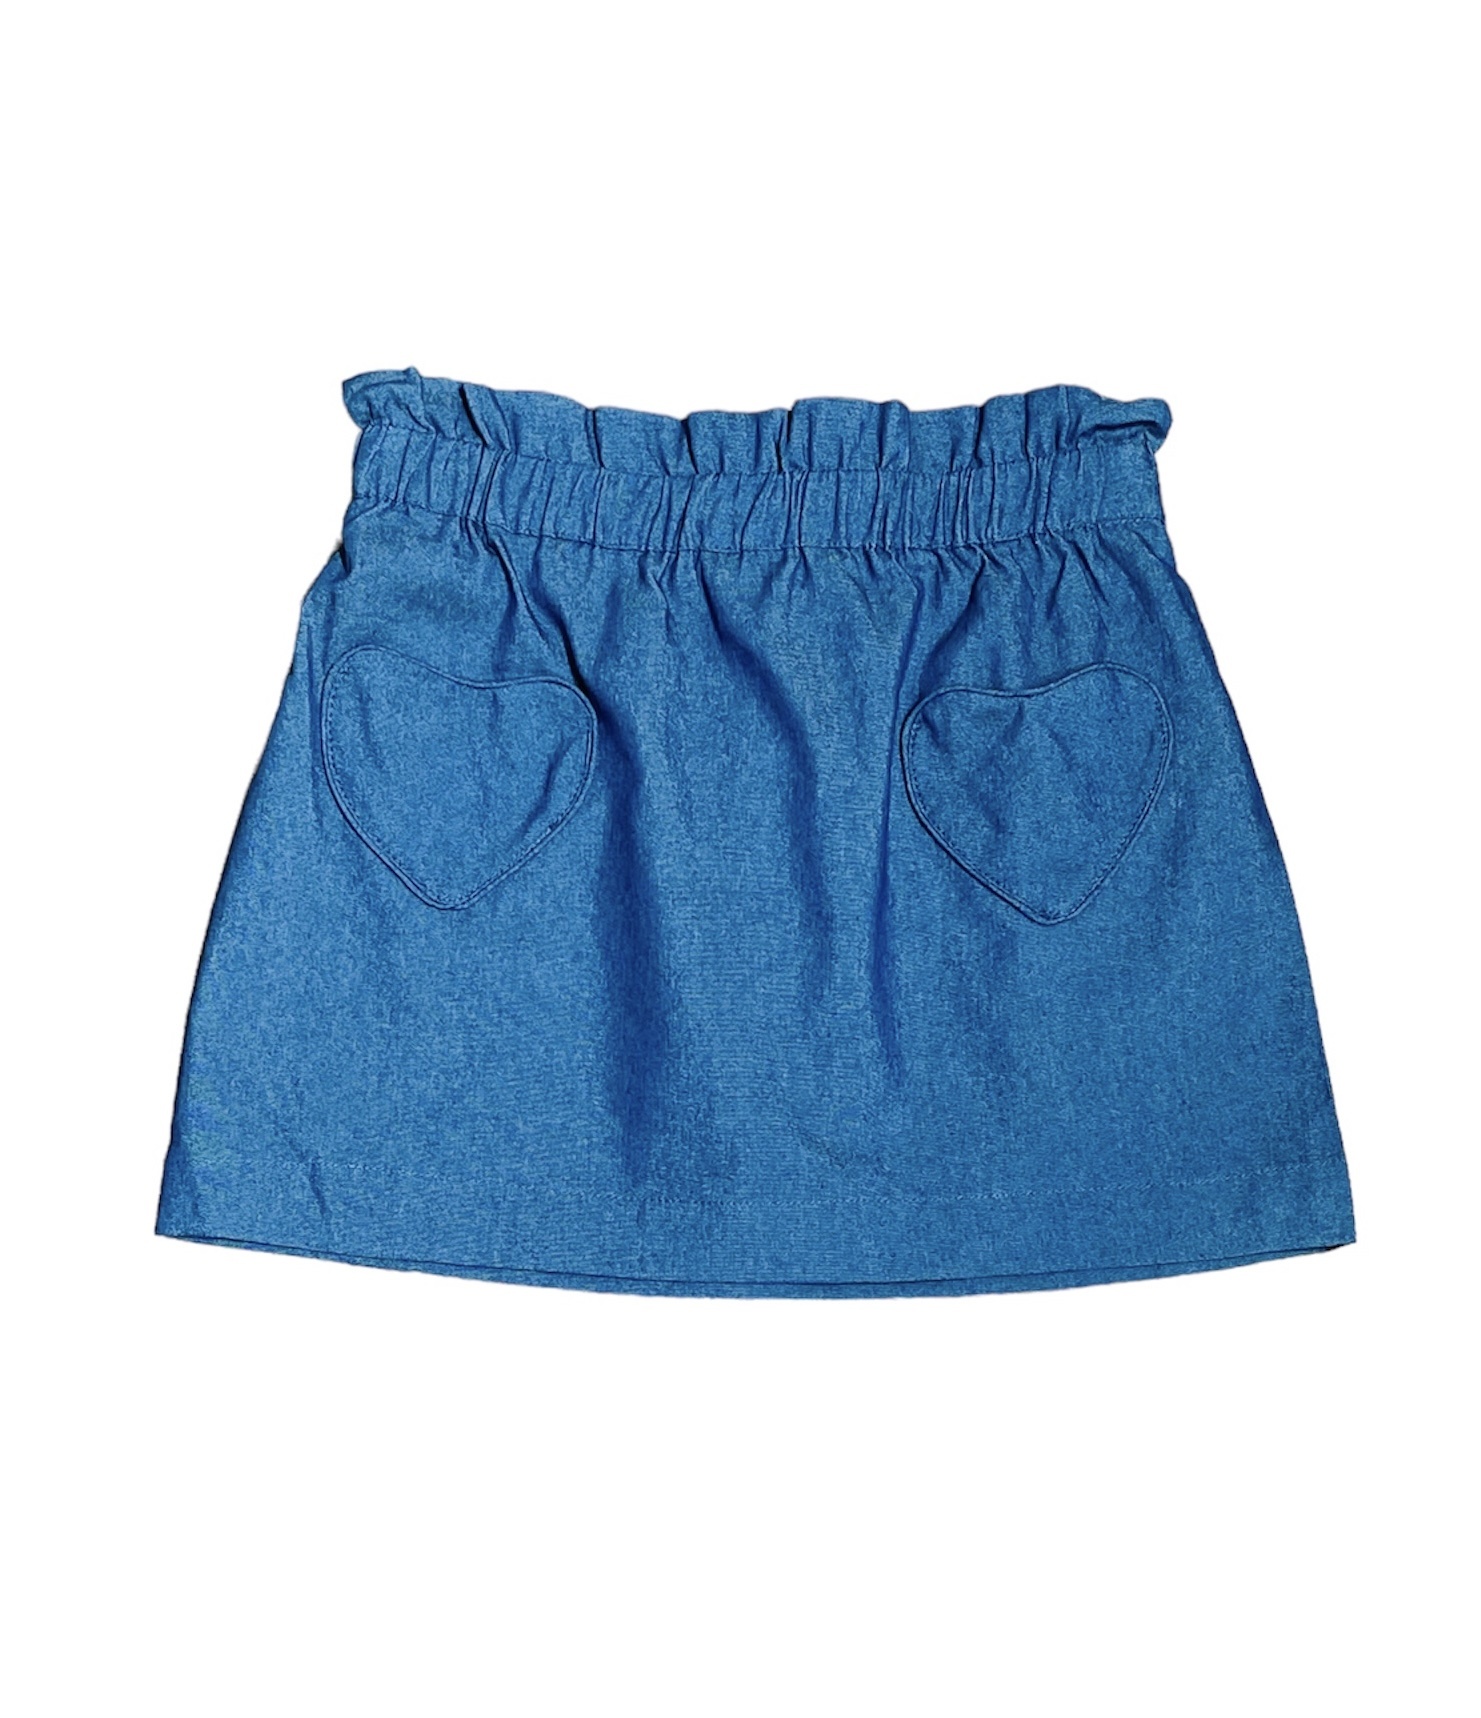 Compania Fantastica Blue Denim High Waisted Mini Skirt